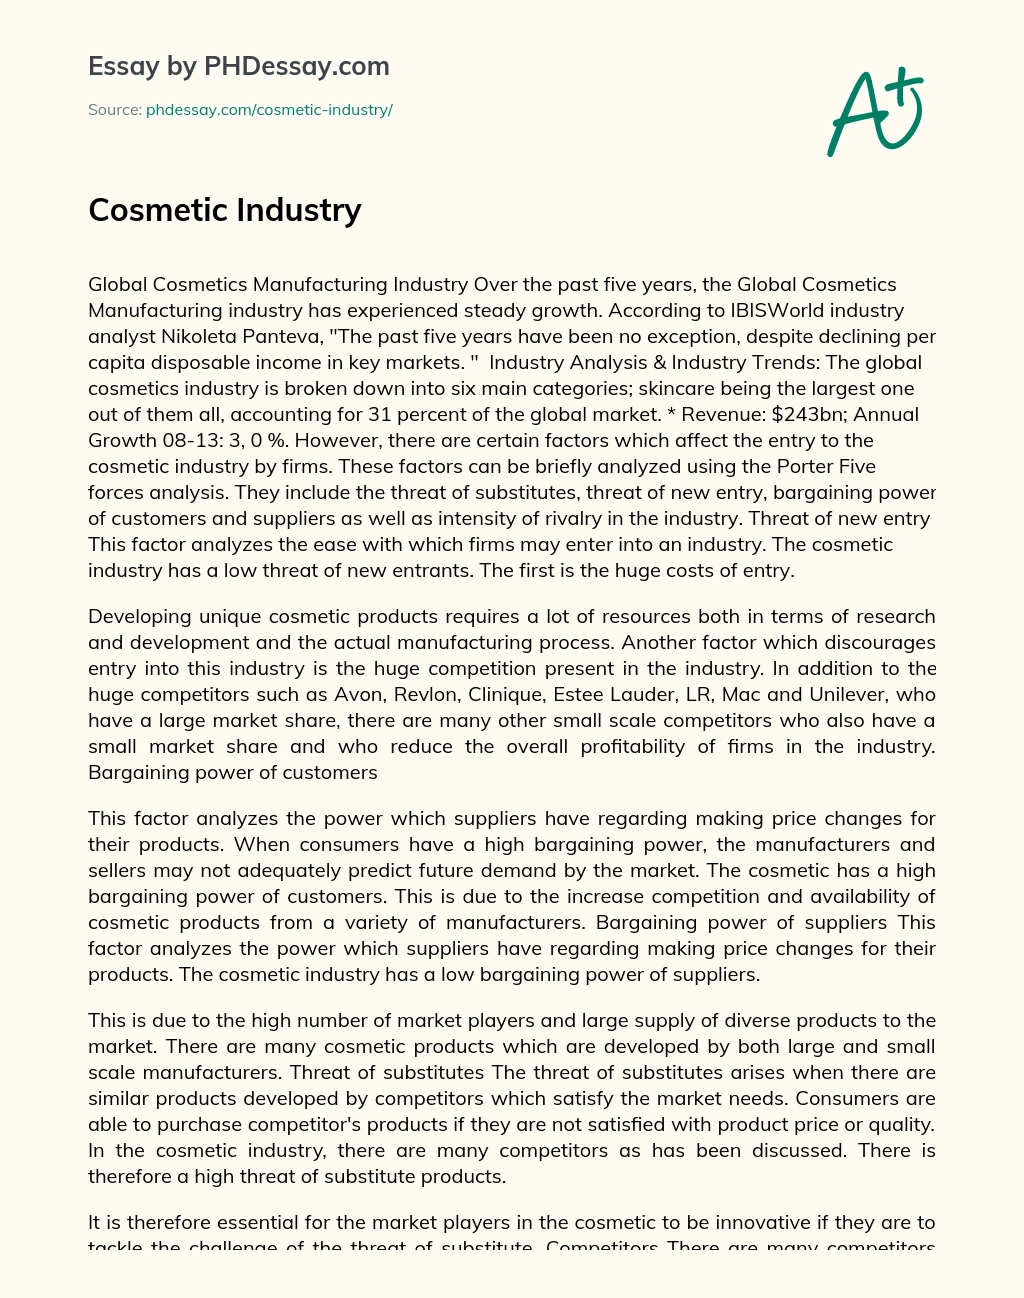 Cosmetic Industry essay